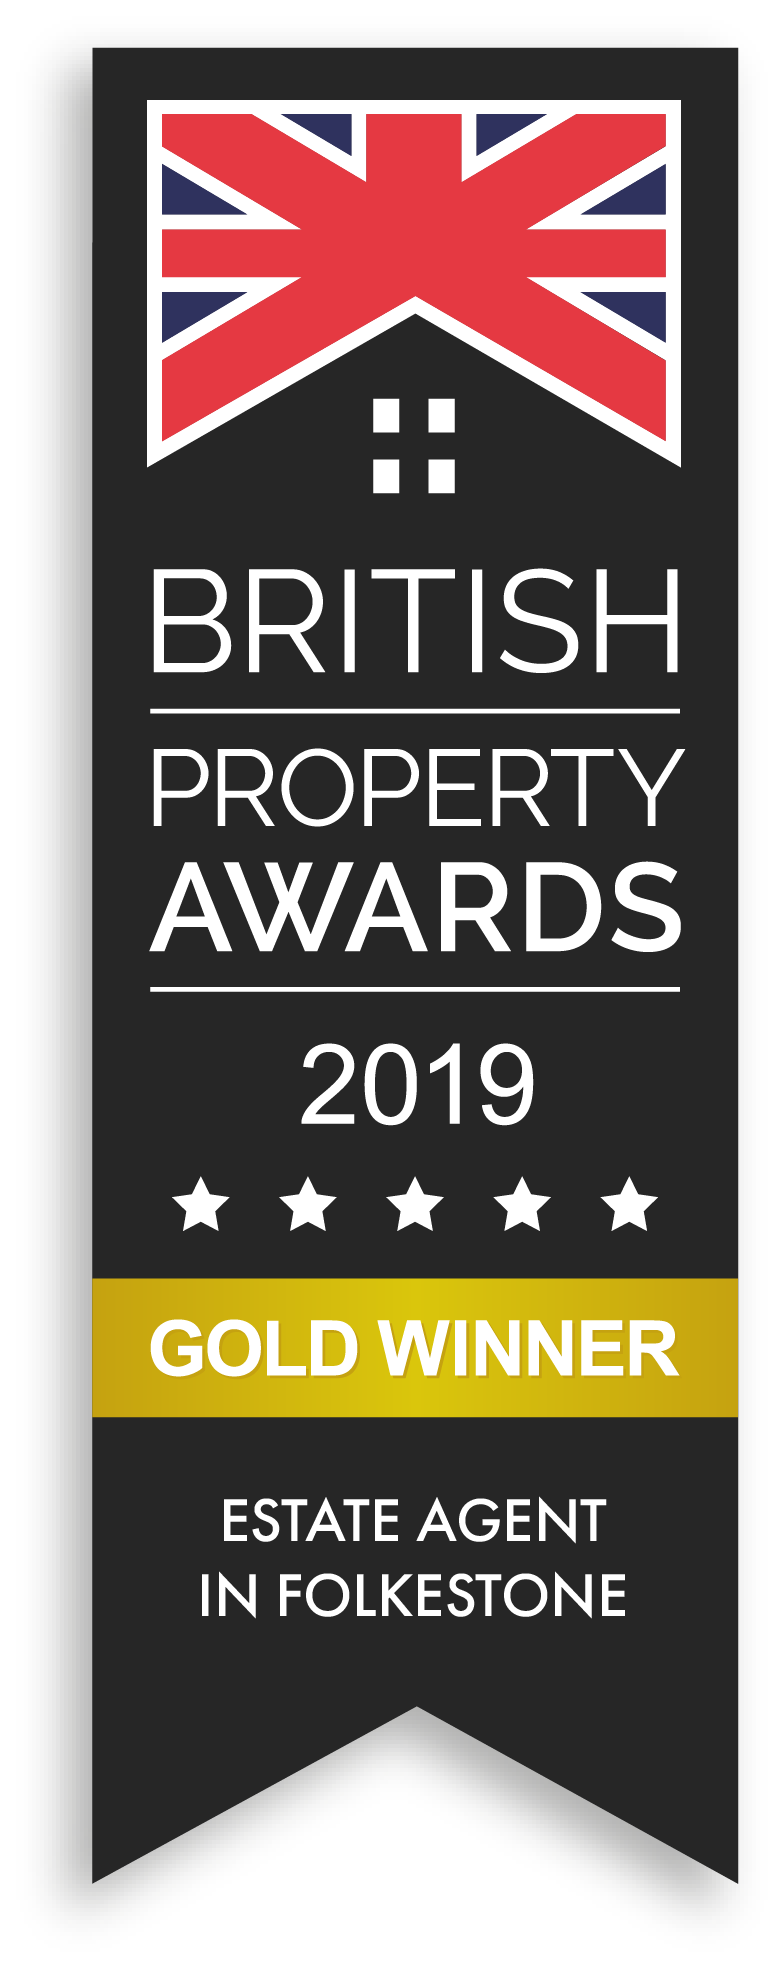 British property awards 2019 gold winner